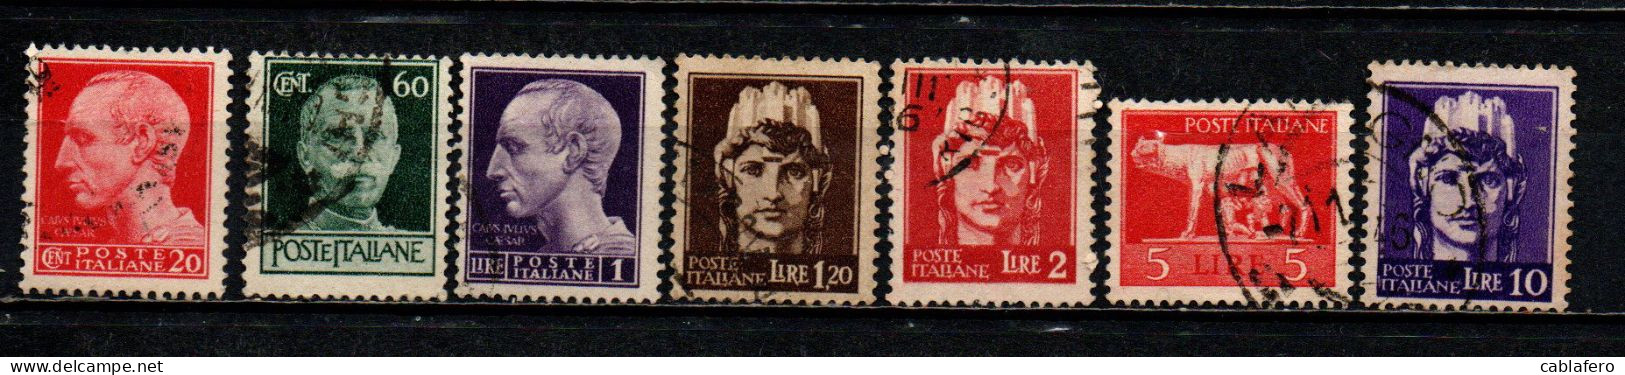 ITALIA LUOGOTENENZA - 1945 - SERIE IMPERIALE SENZA FASCIO - FIL. RUOTA - USATI - Usati